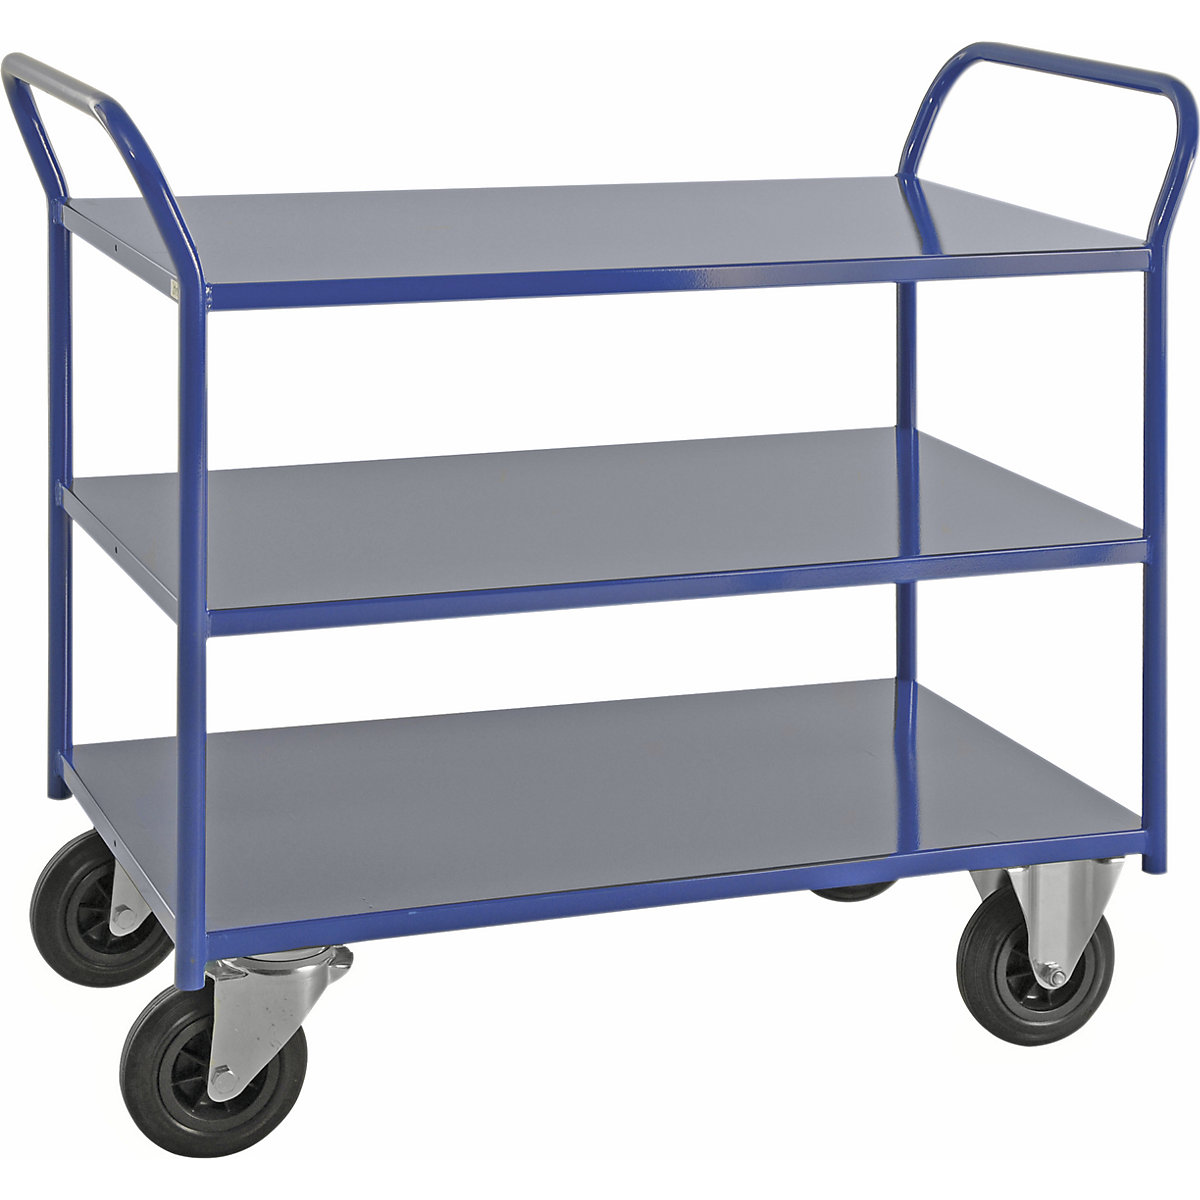 KM41 table trolley – Kongamek, 3 shelves, LxWxH 1070 x 550 x 975 mm, blue, 2 swivel castors and 2 fixed castors, 5+ items-5